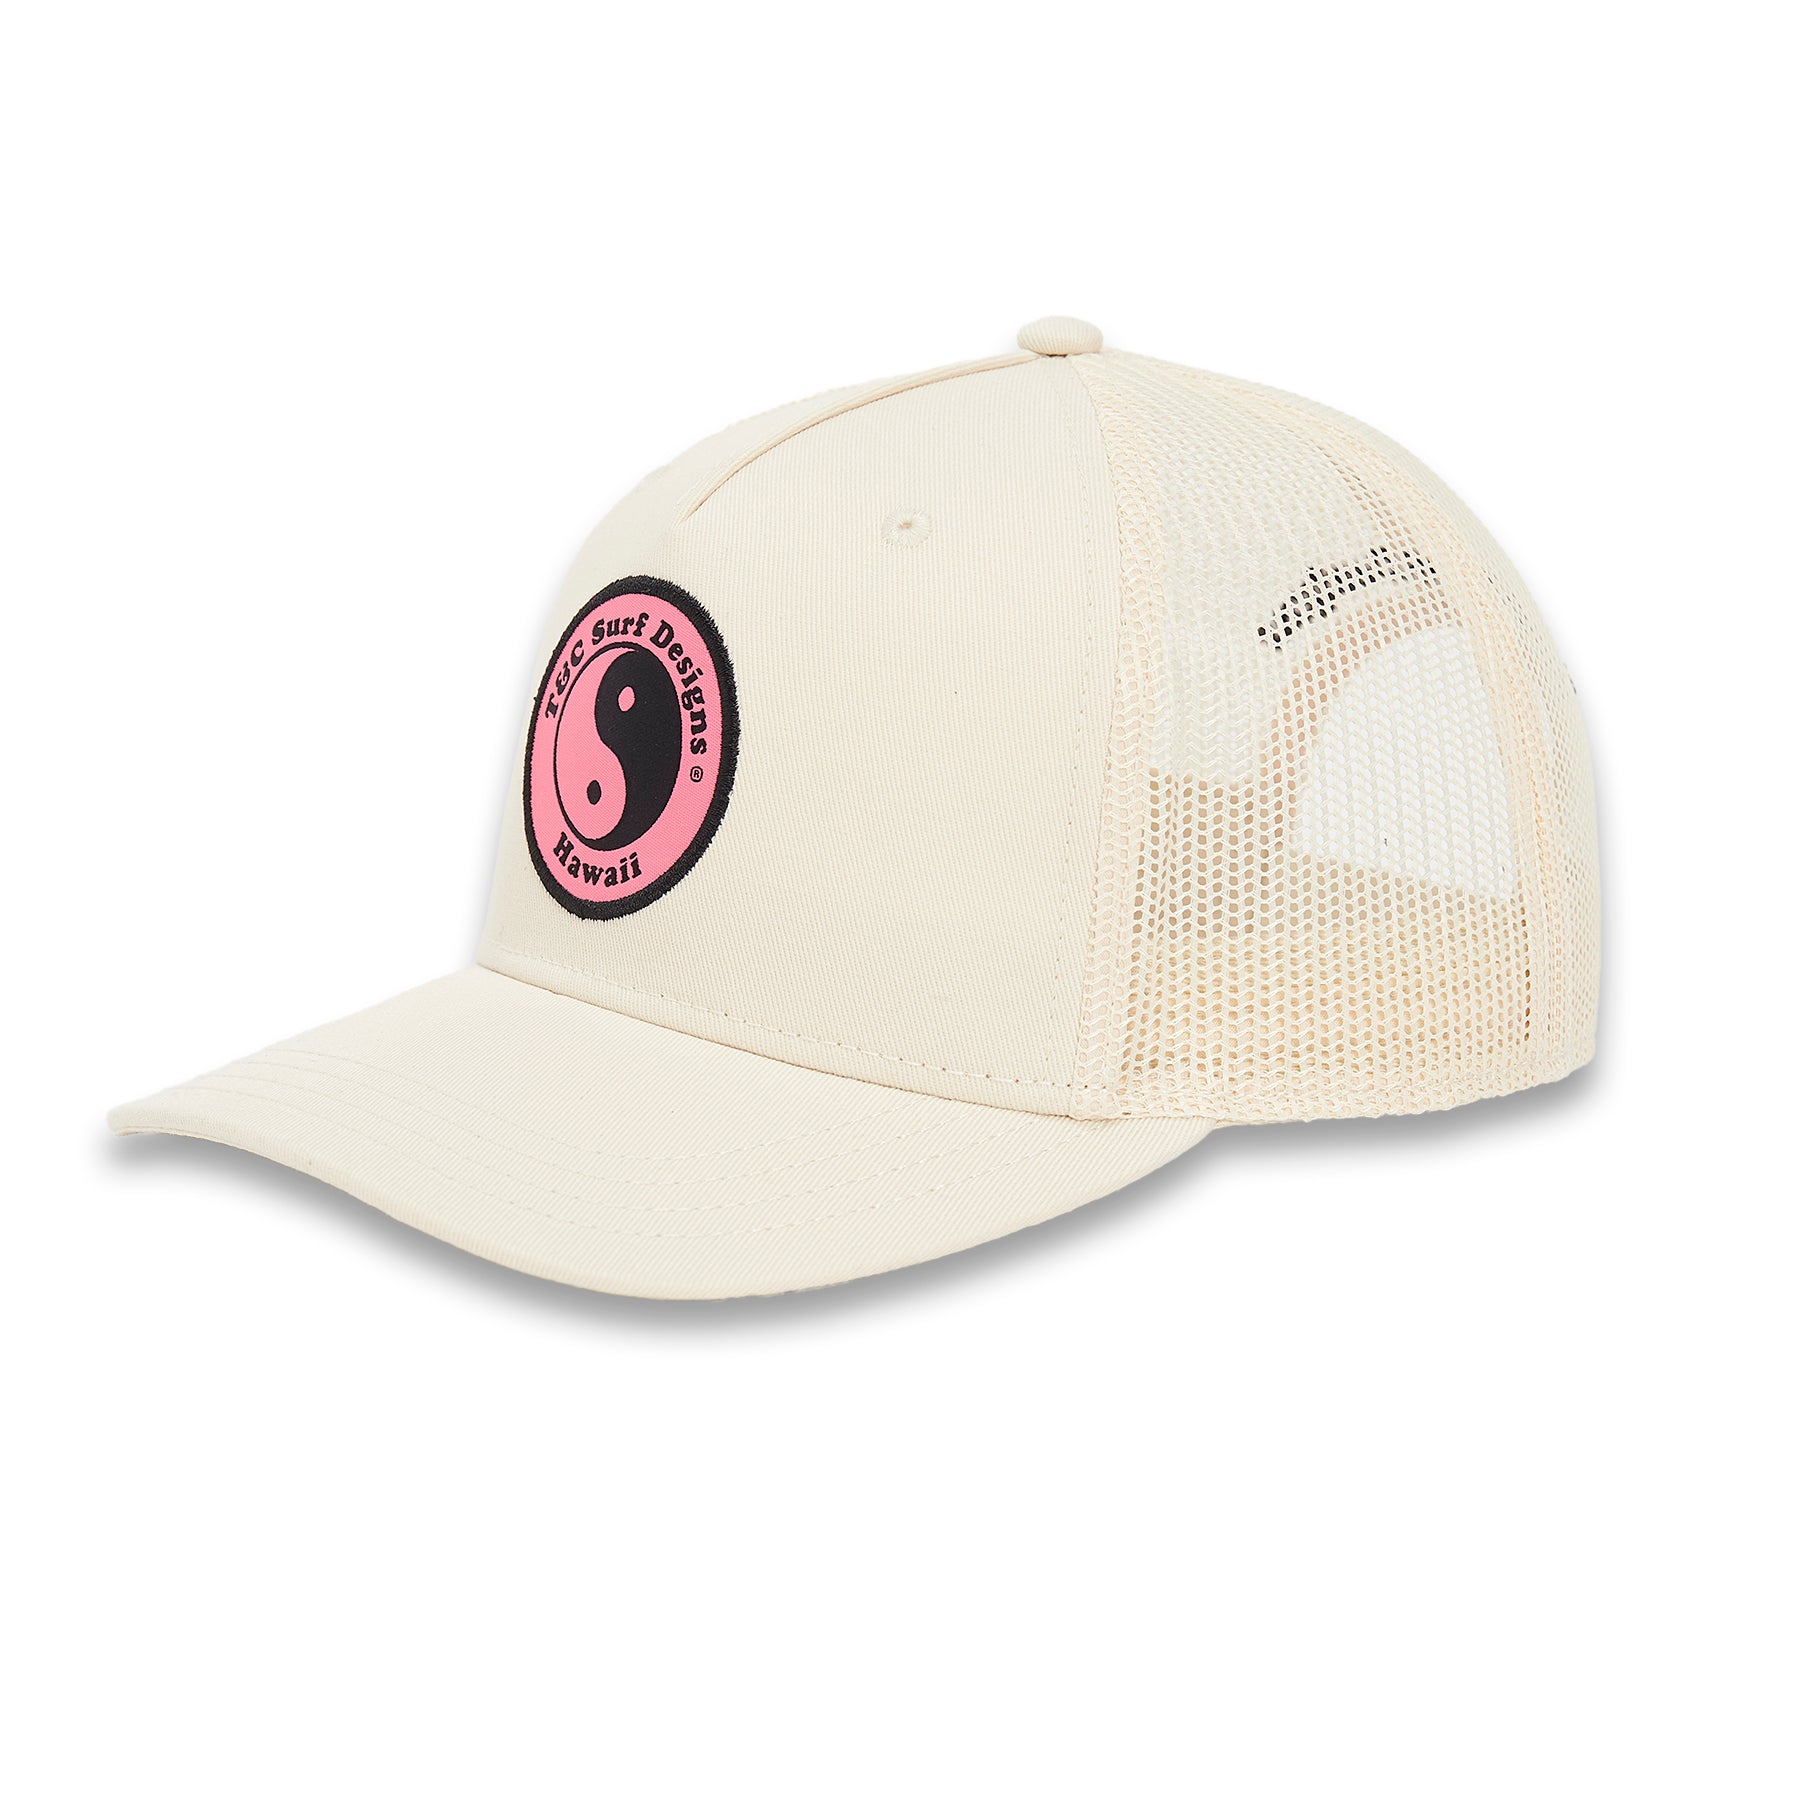 T&C Surf Designs YY Trucker Cap - Natural Natural Pink logo